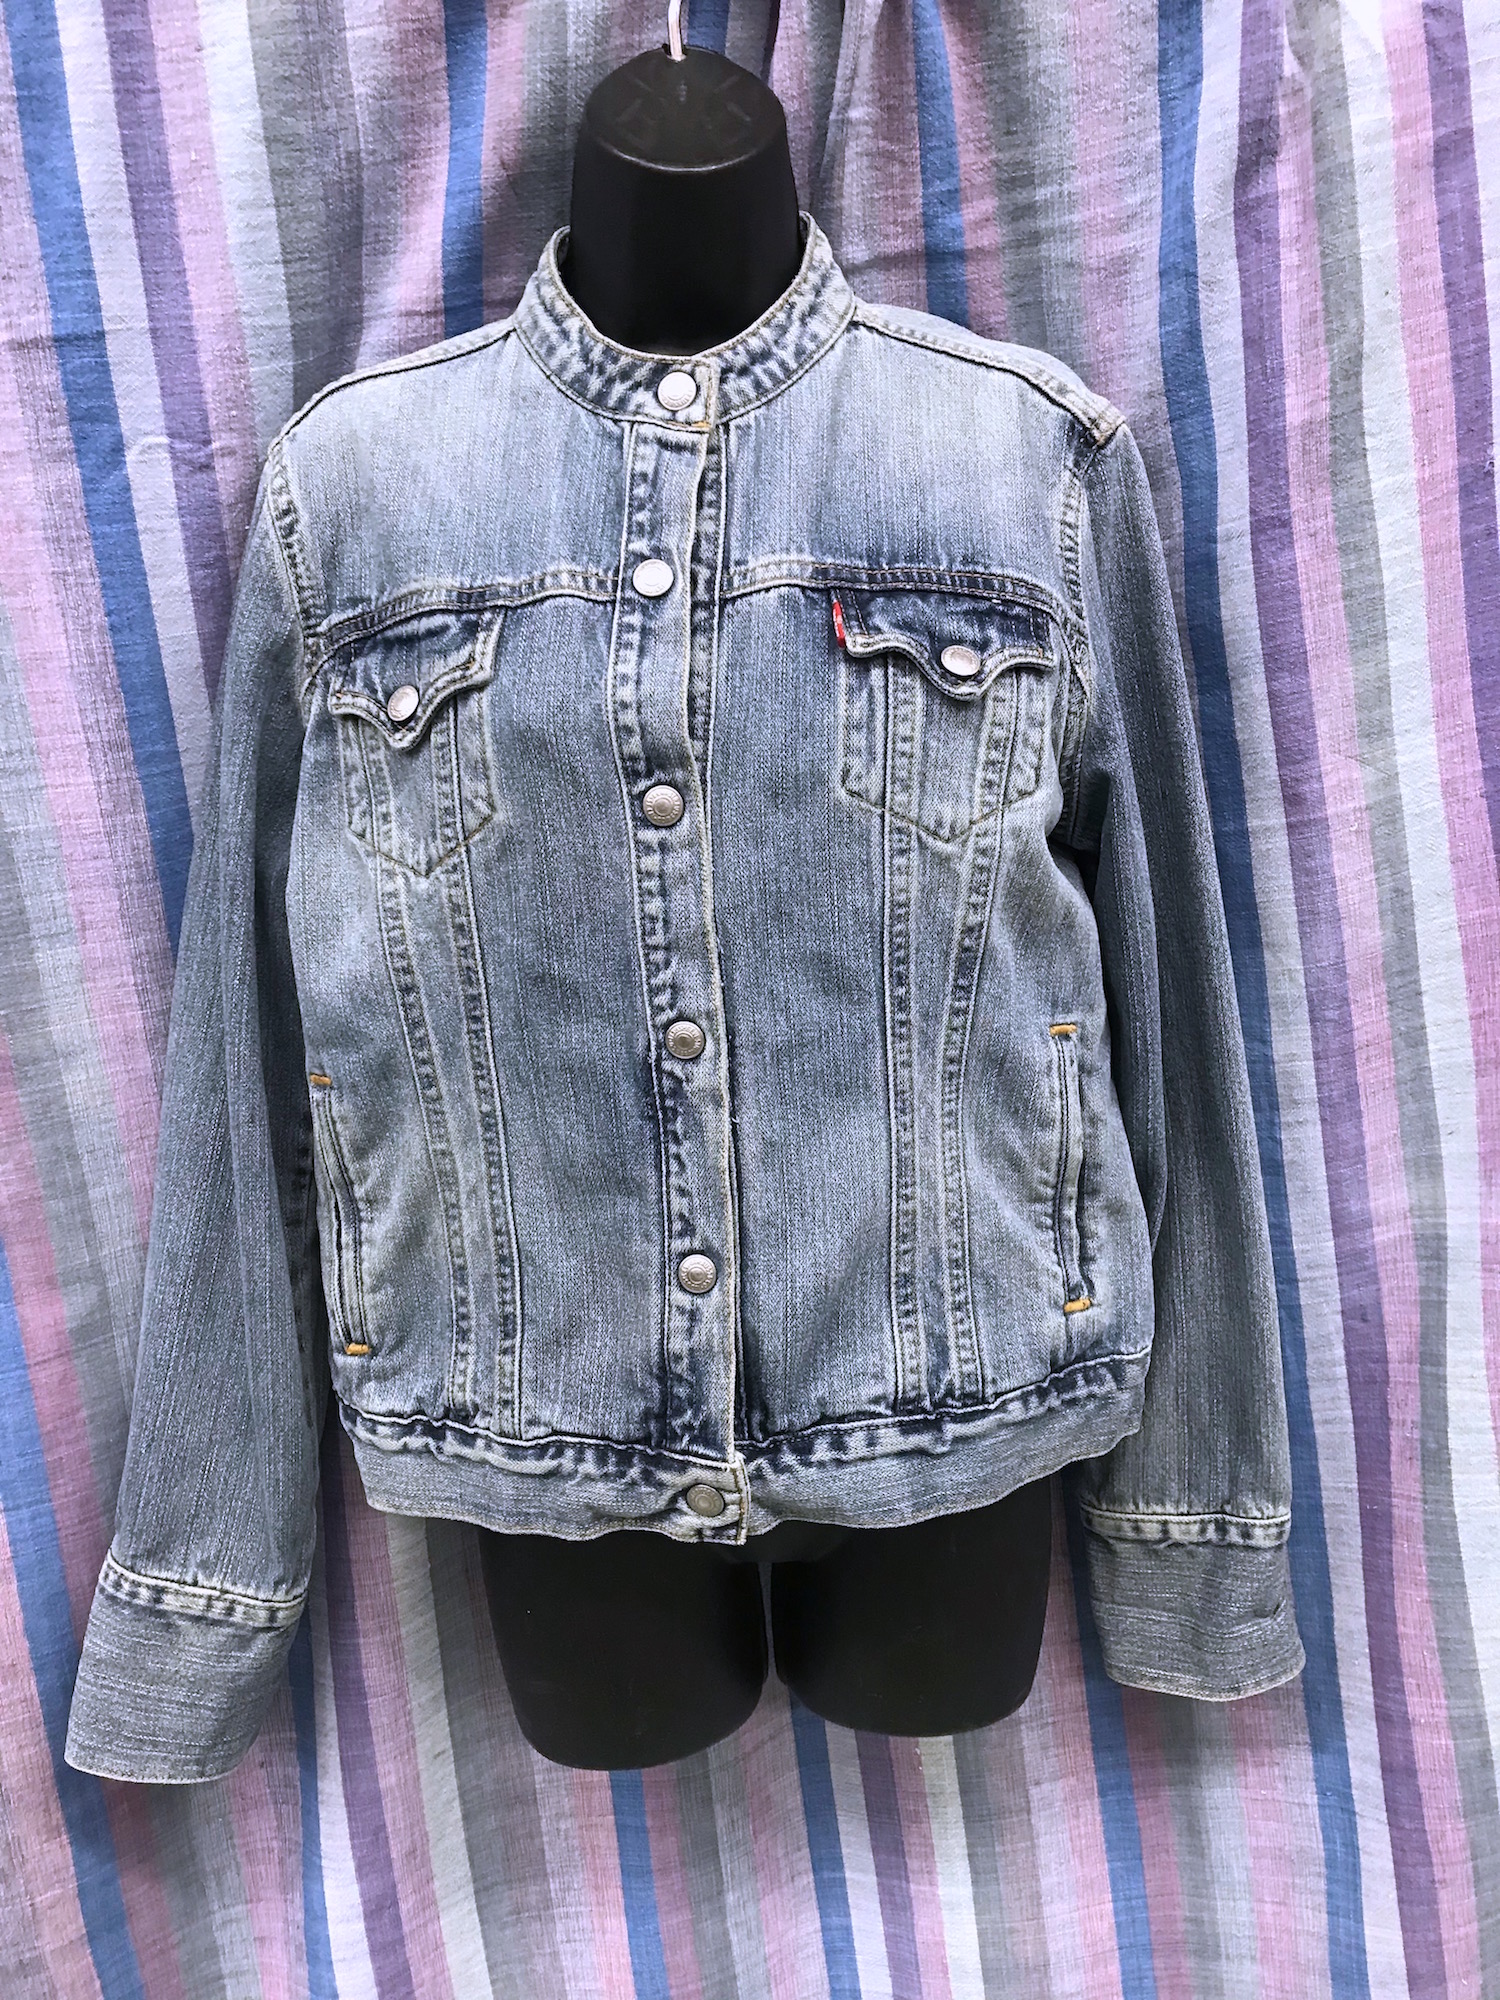 Womens Levis Denim Jacket - Tucson Thrift Shop